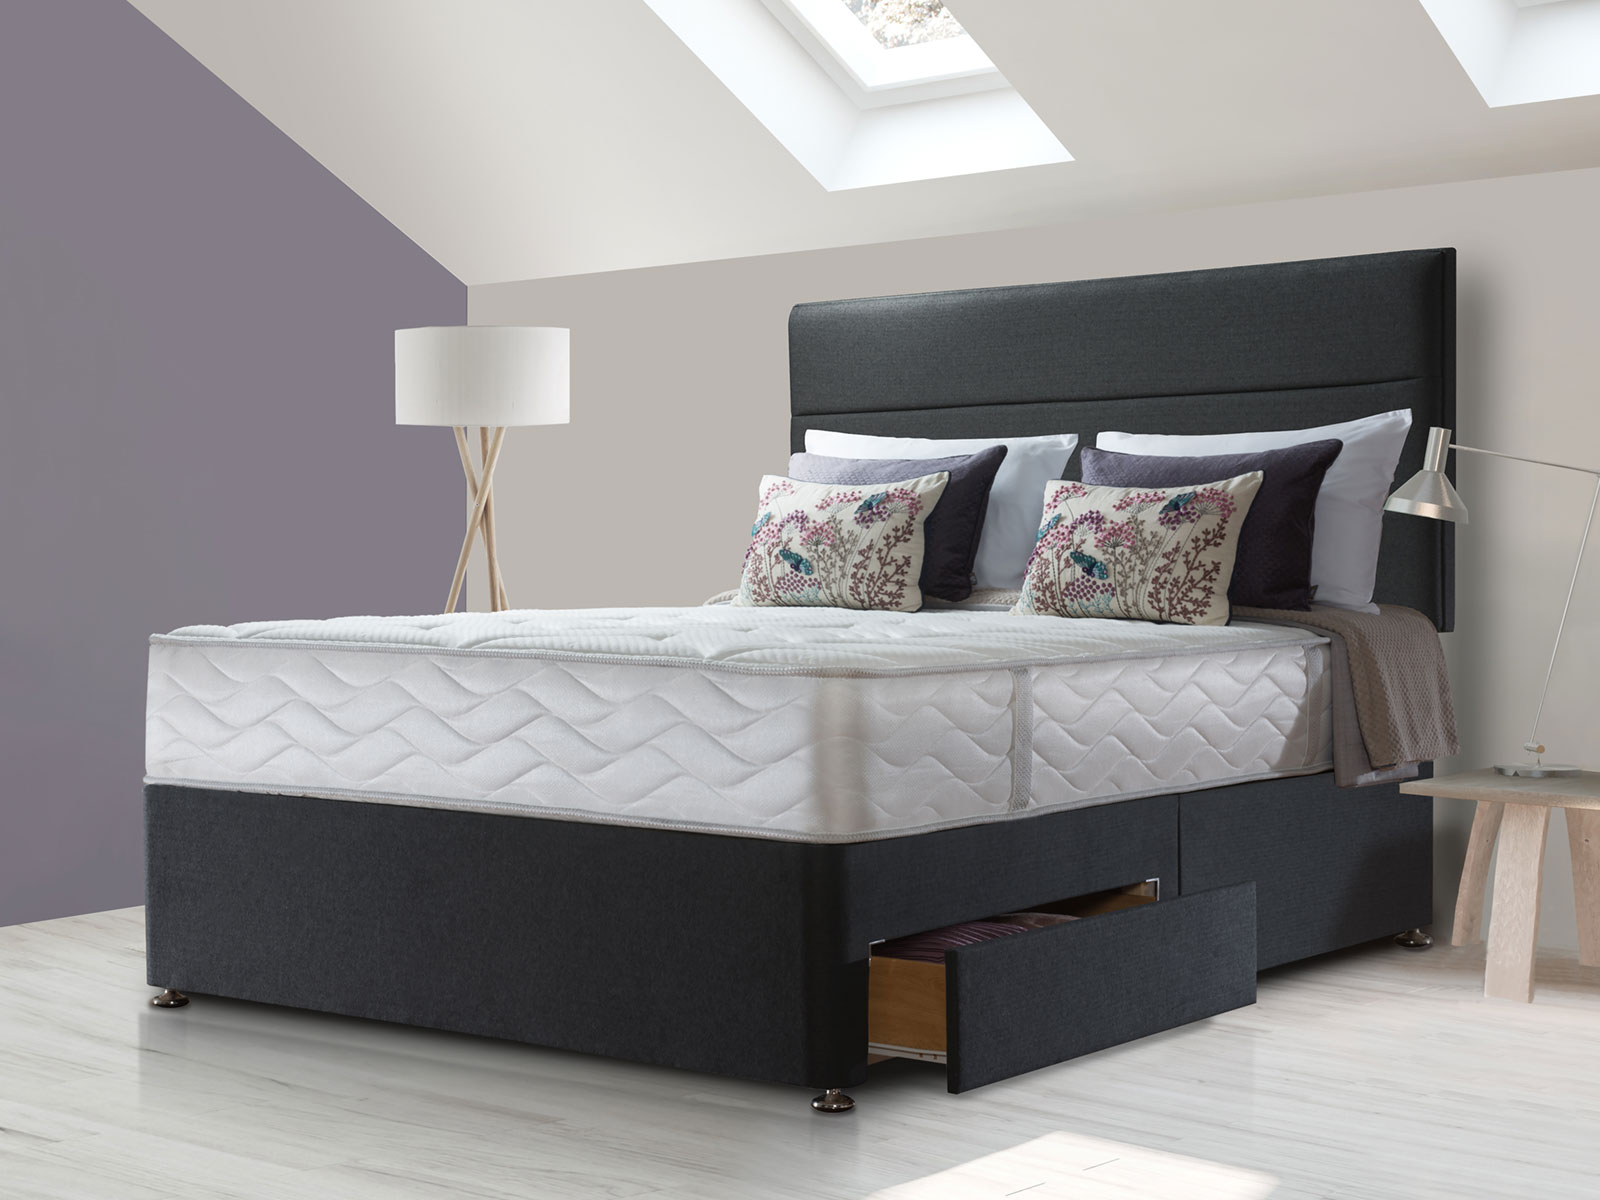 sealy anniversary latex mattress review